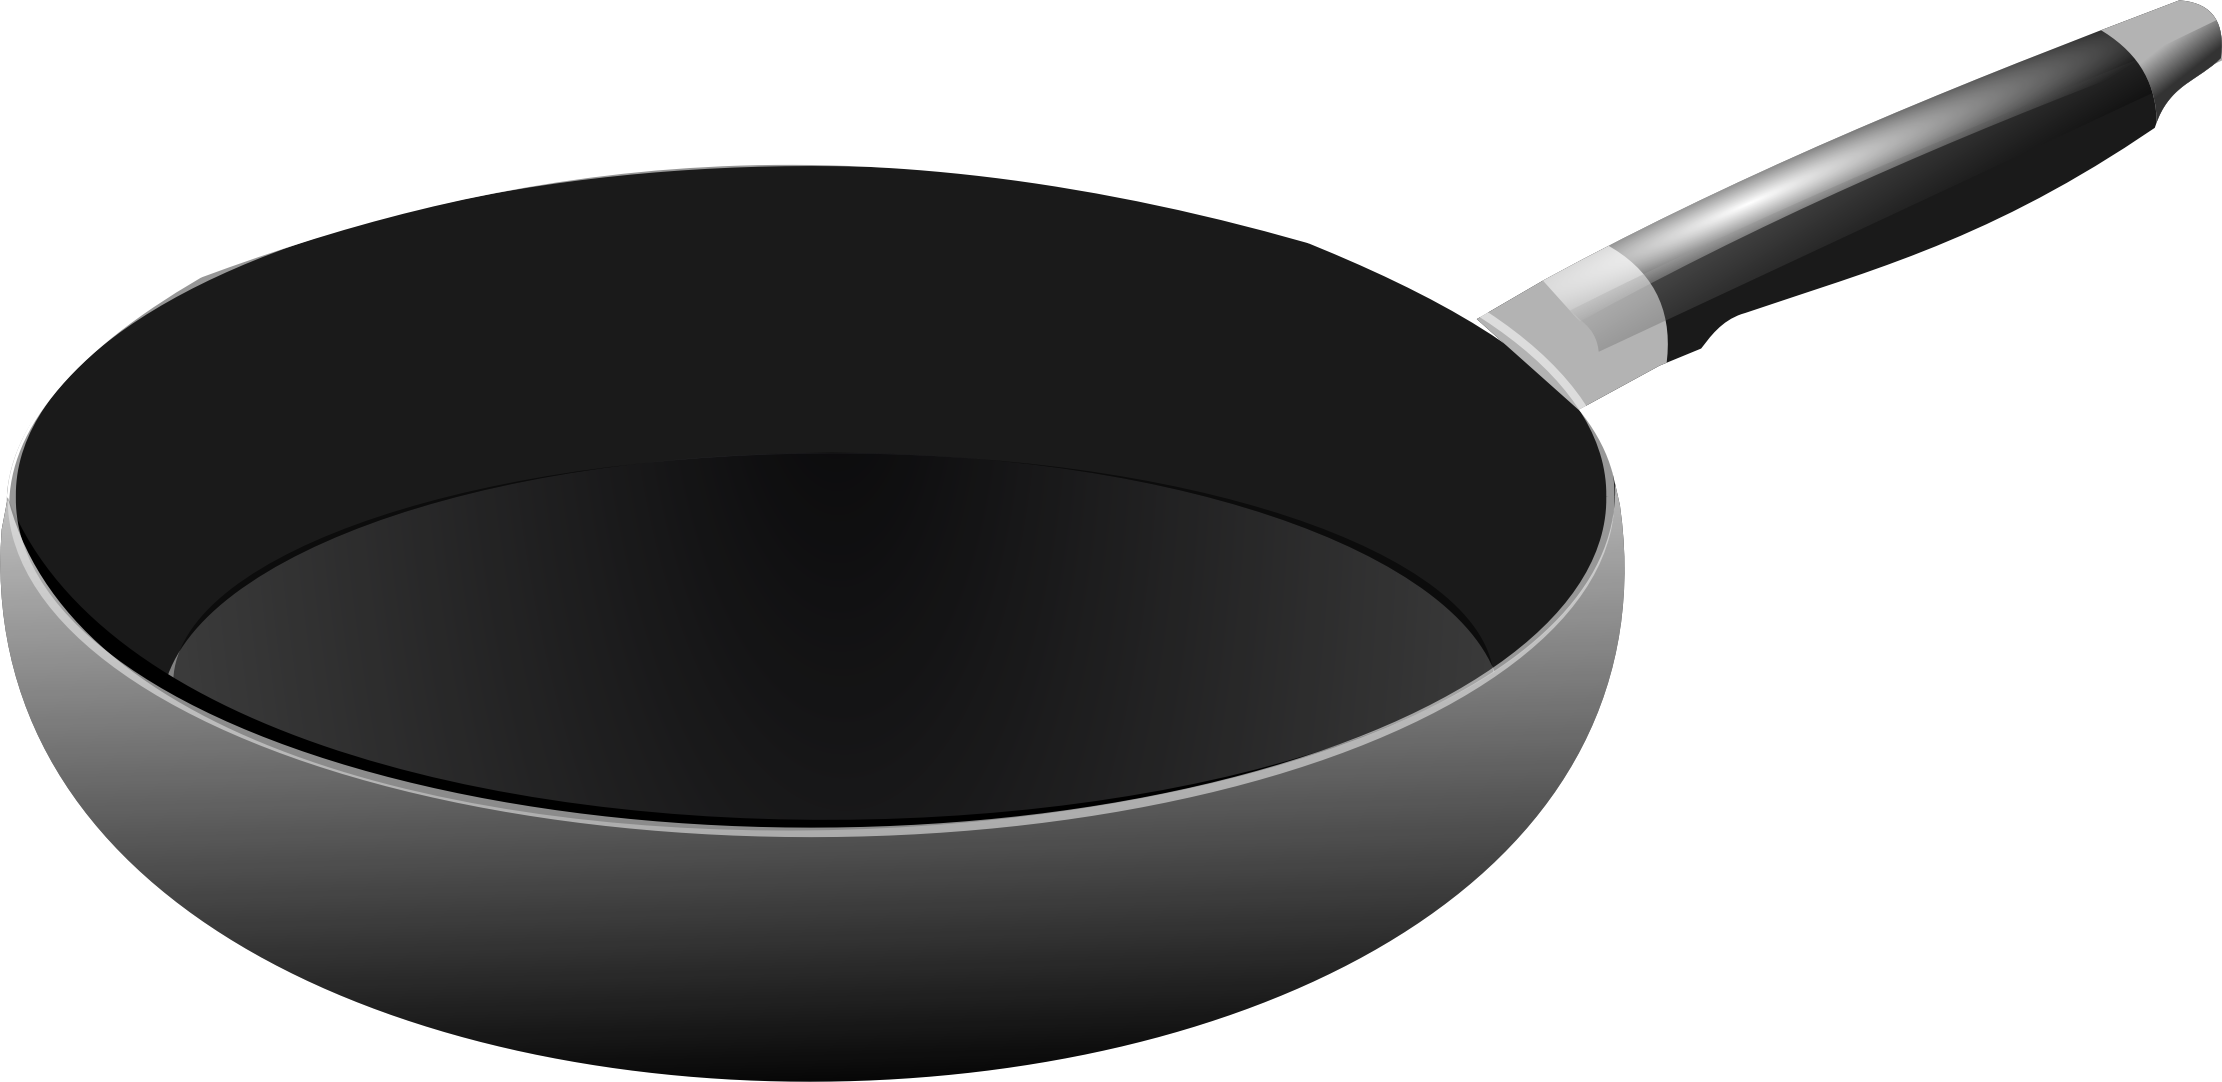 Frying Pan Transparent Background